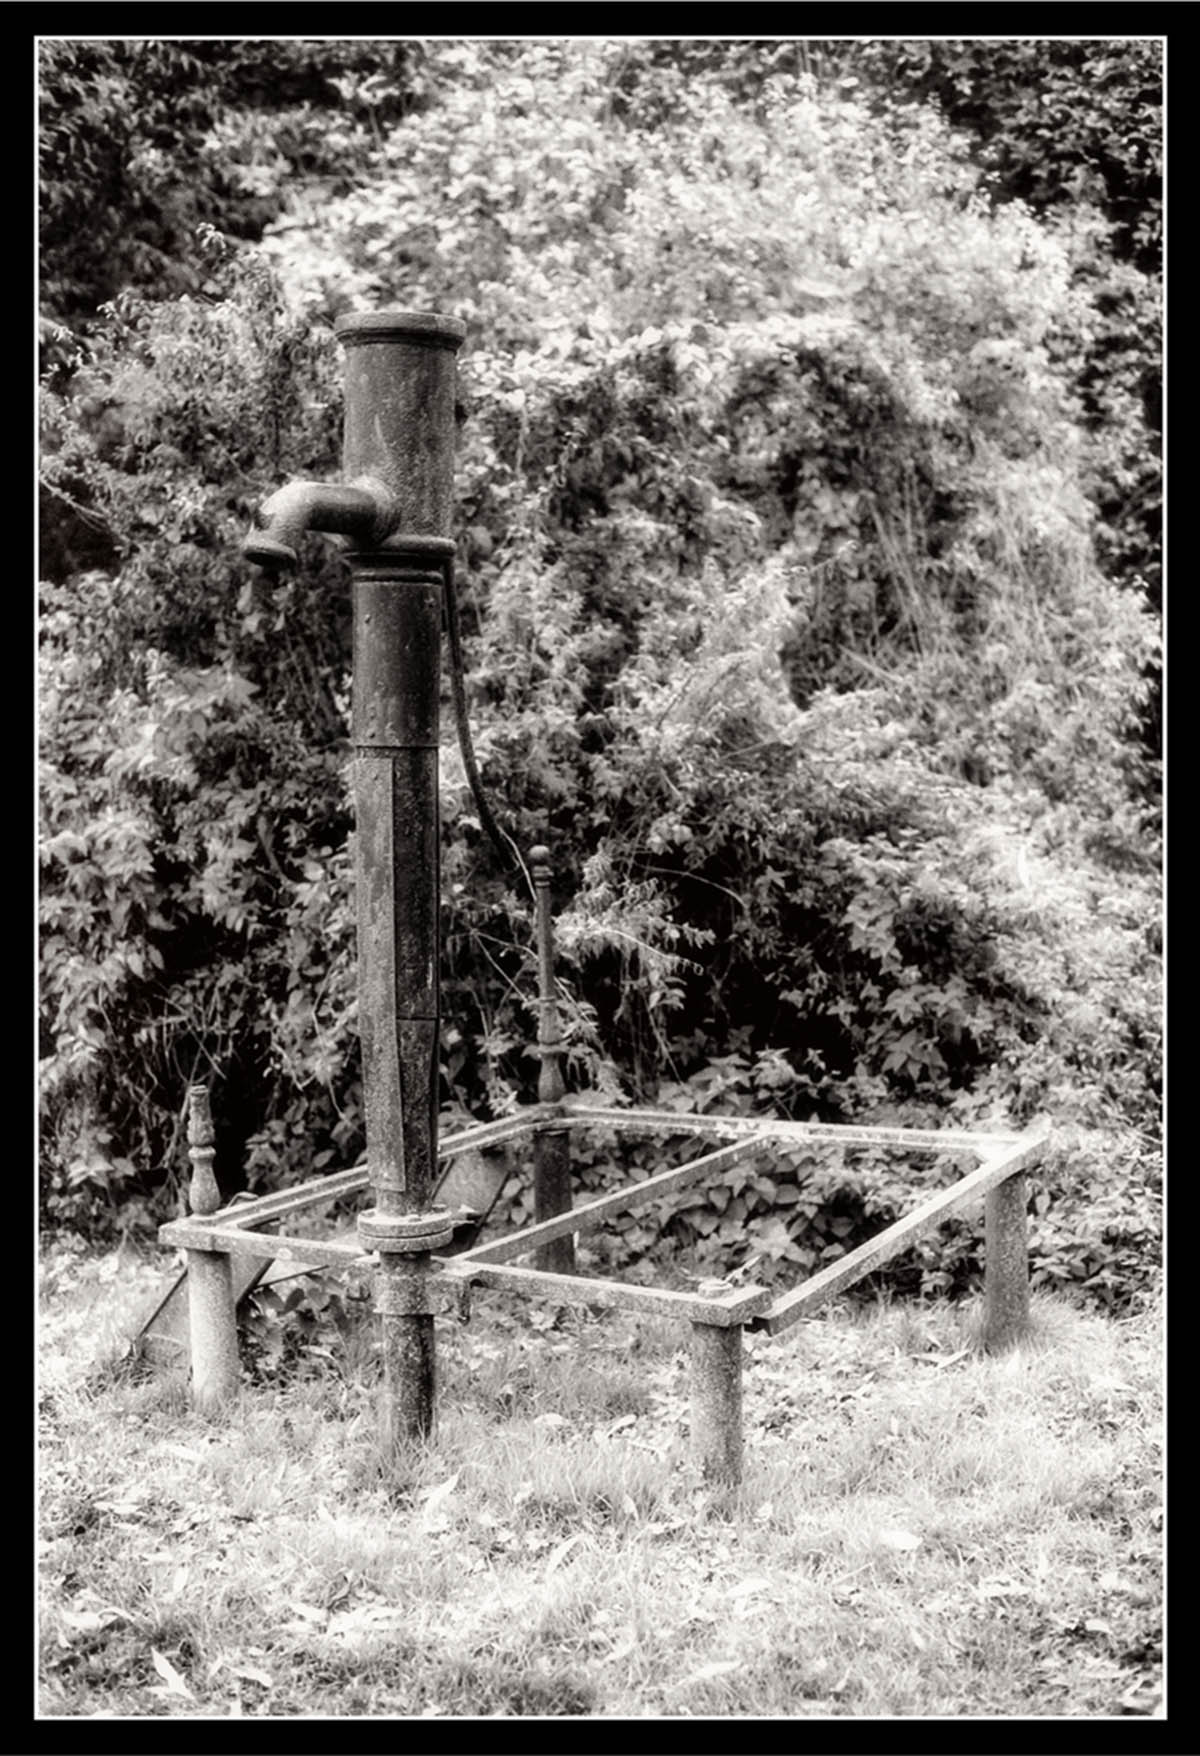 Old water pump, Kilham, 50mm, David Ireland jpg